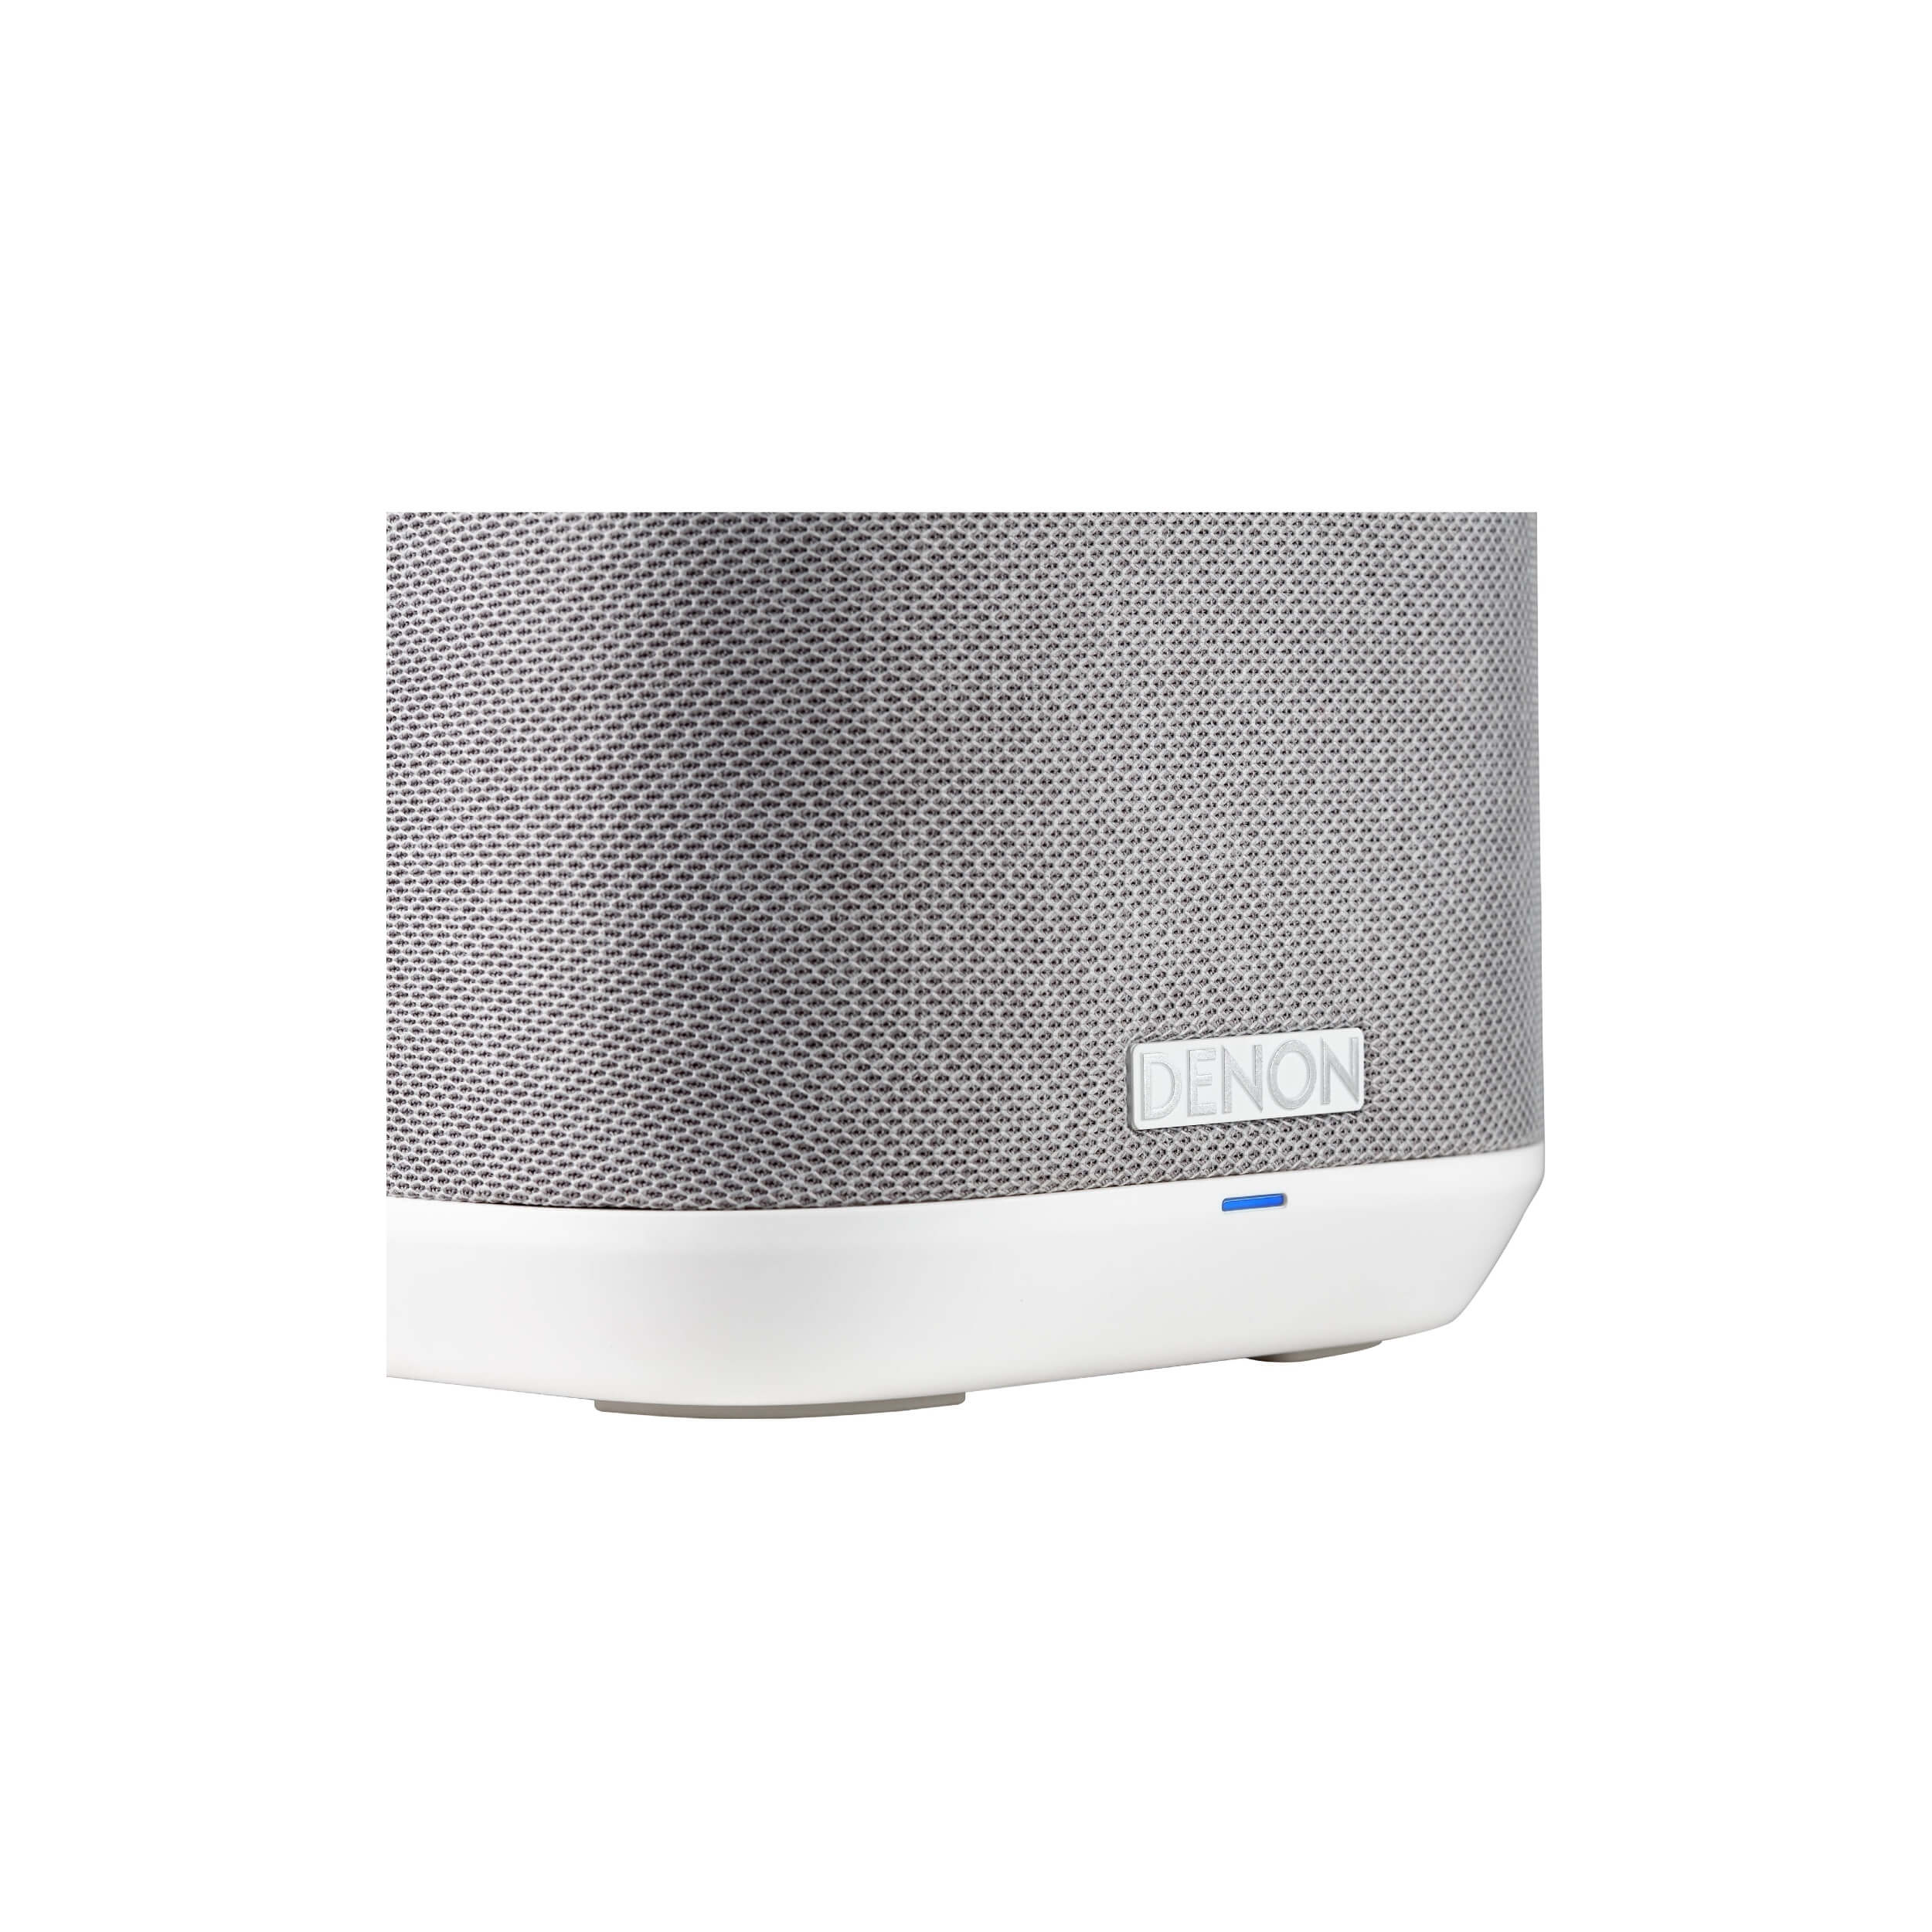 Denon Home 150 Wireless Speaker (White)